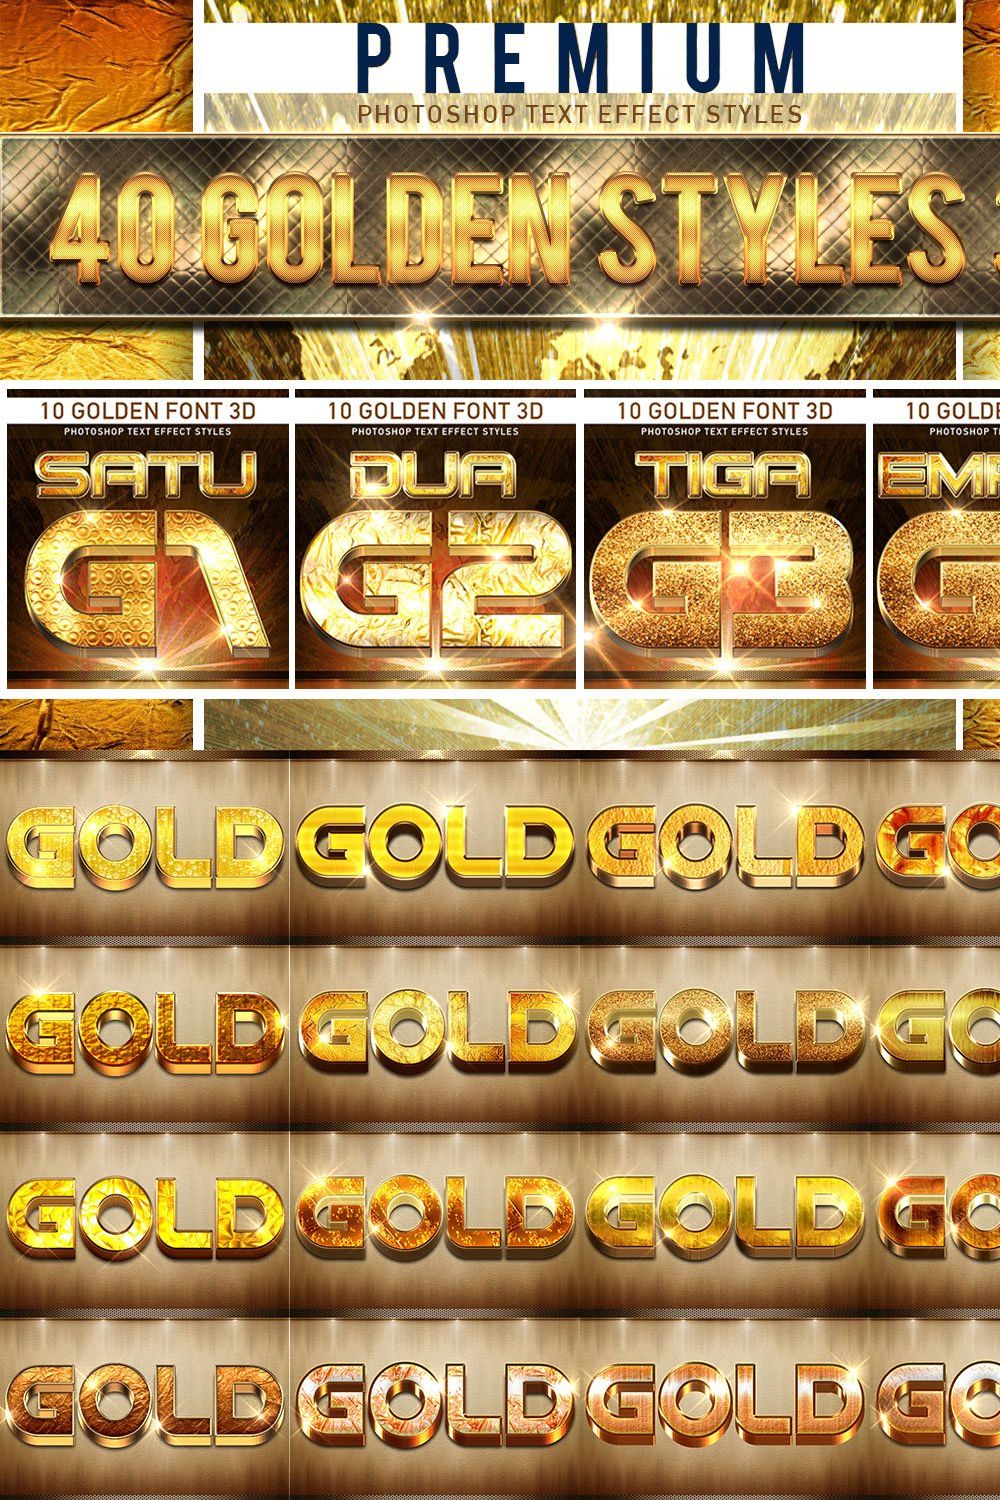 40 Golden Font 3D pinterest preview image.